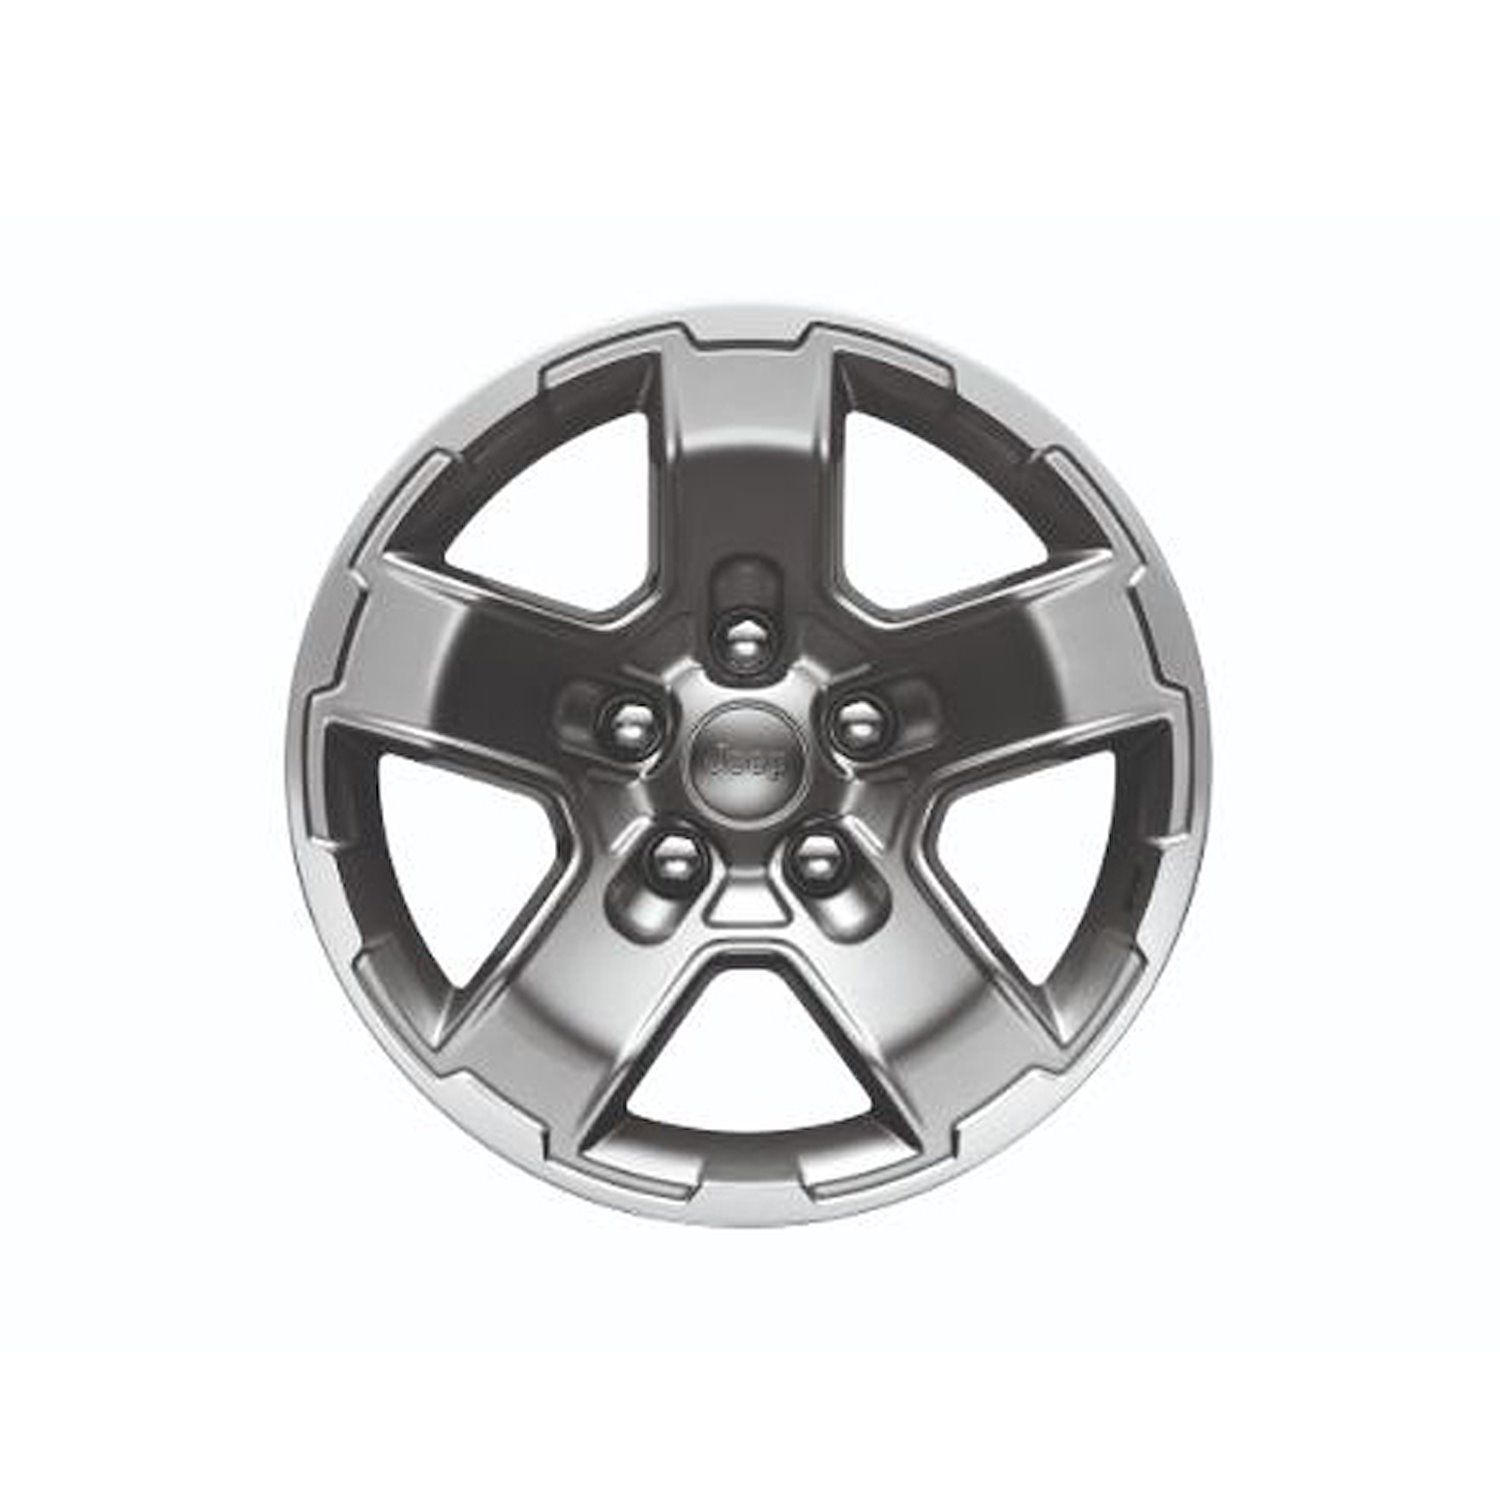 Gear Design 17 in. Cast Aluminum Wheel for 2018 Jeep Wrangler JL & 2007-2018 Jeep Wrangler JK